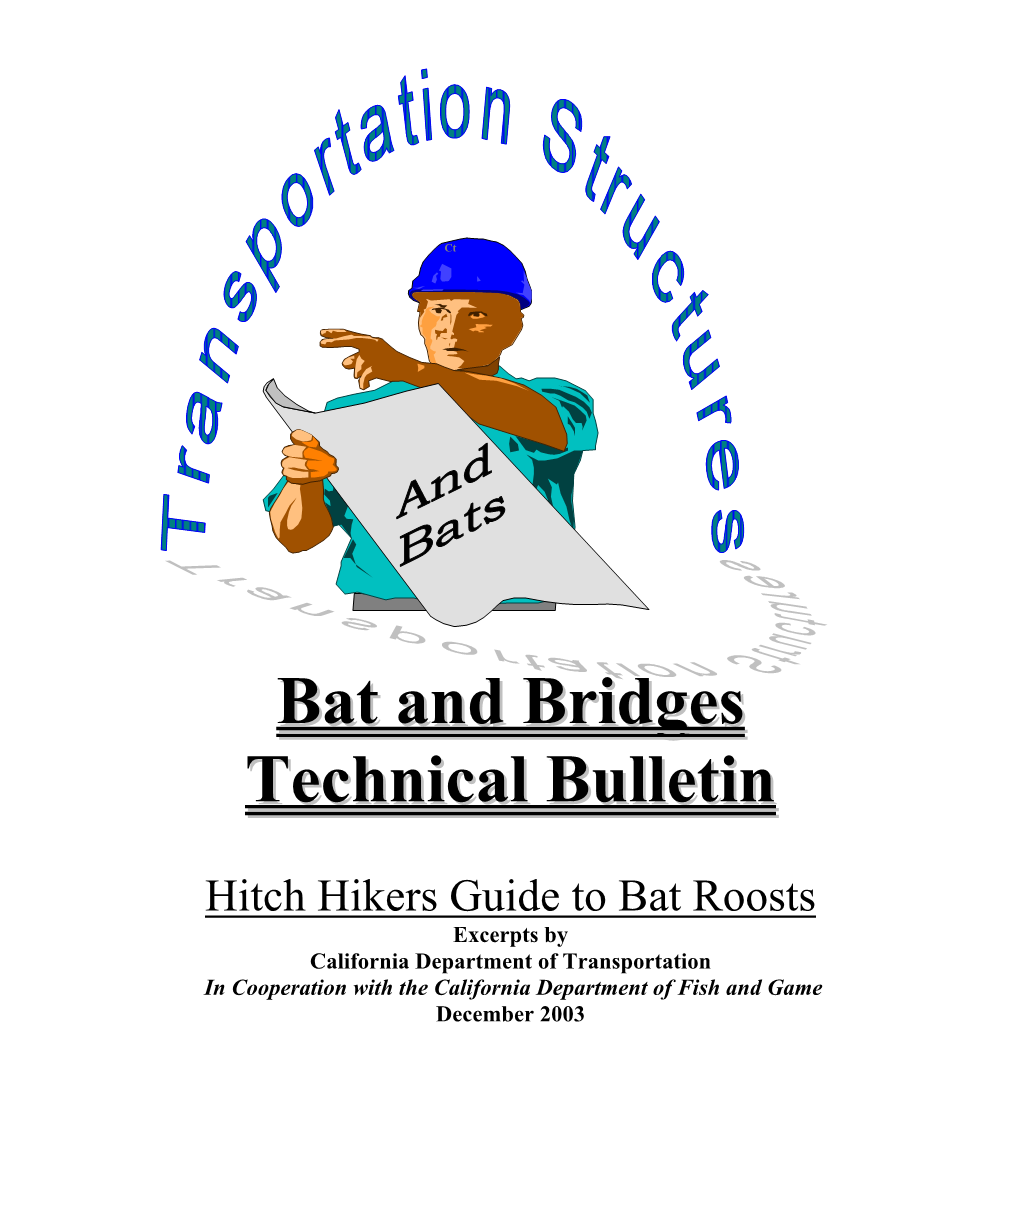 Bat and Bridges Technical Bulletin (Hitchhiker Guide to Bat Roosts), California Department of Transportation, Sacramento CA